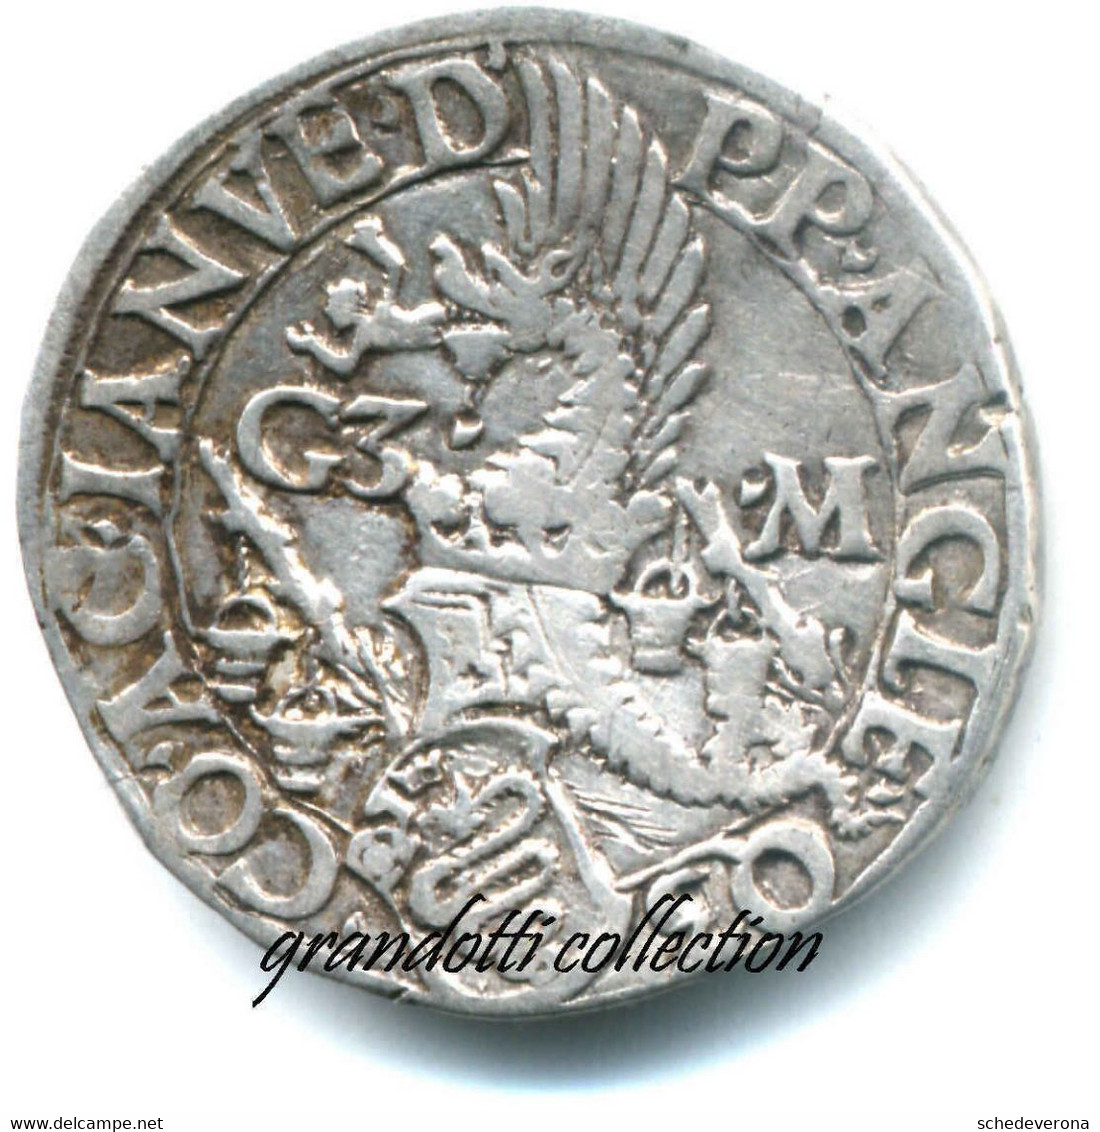 TESTONE GALEAZZO MARIA SFORZA (1466 - 1476) MILANO MONETA VARIANTE VICECO - Monnaies Féodales